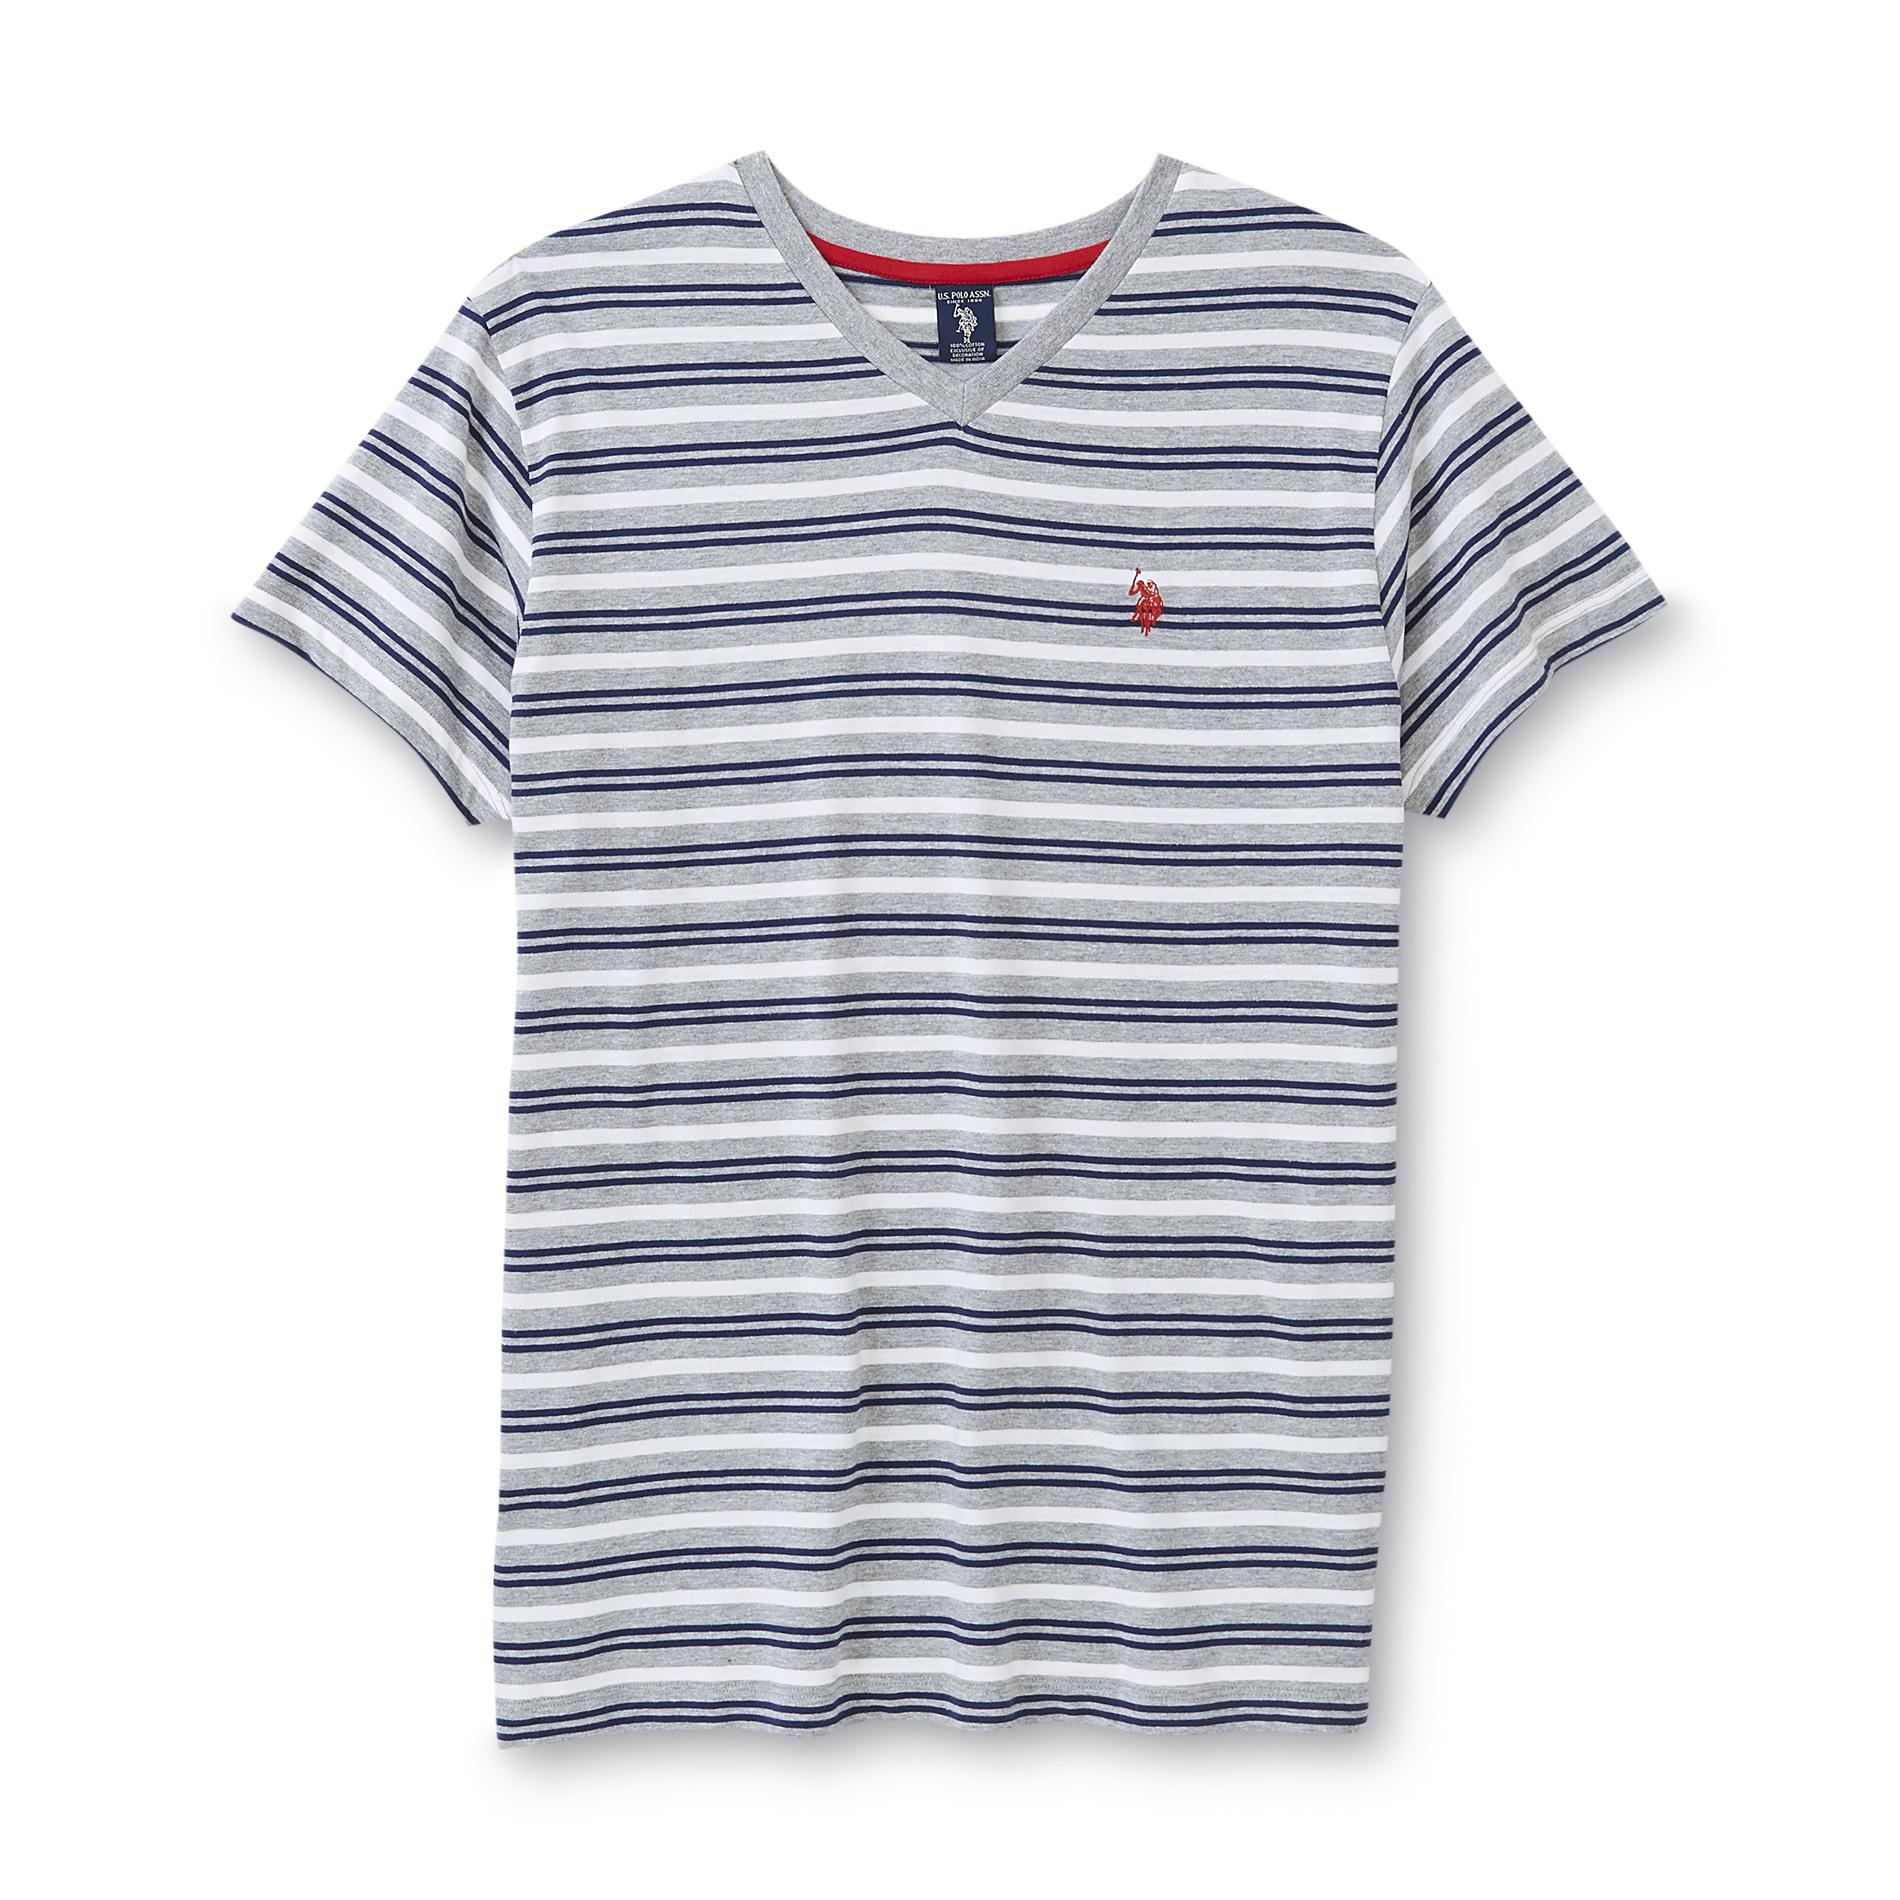 U.S. Polo Assn. Men's V-Neck T-Shirt - Striped